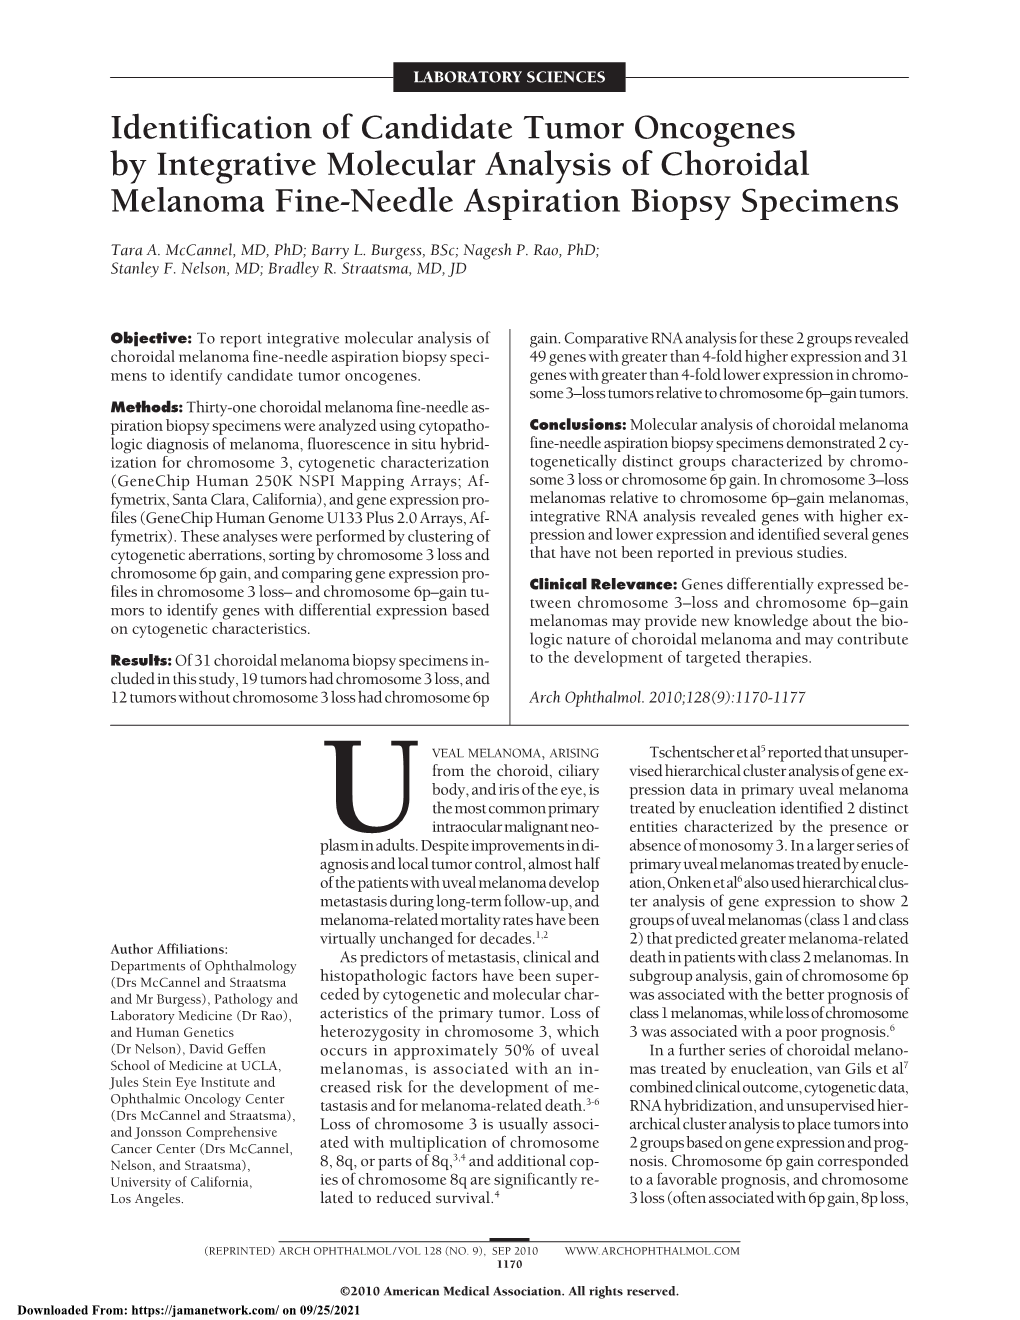 Identification of Candidate Tumor Oncogenes by Integrative Molecular Analysis of Choroidal Melanoma Fine-Needle Aspiration Biopsy Specimens